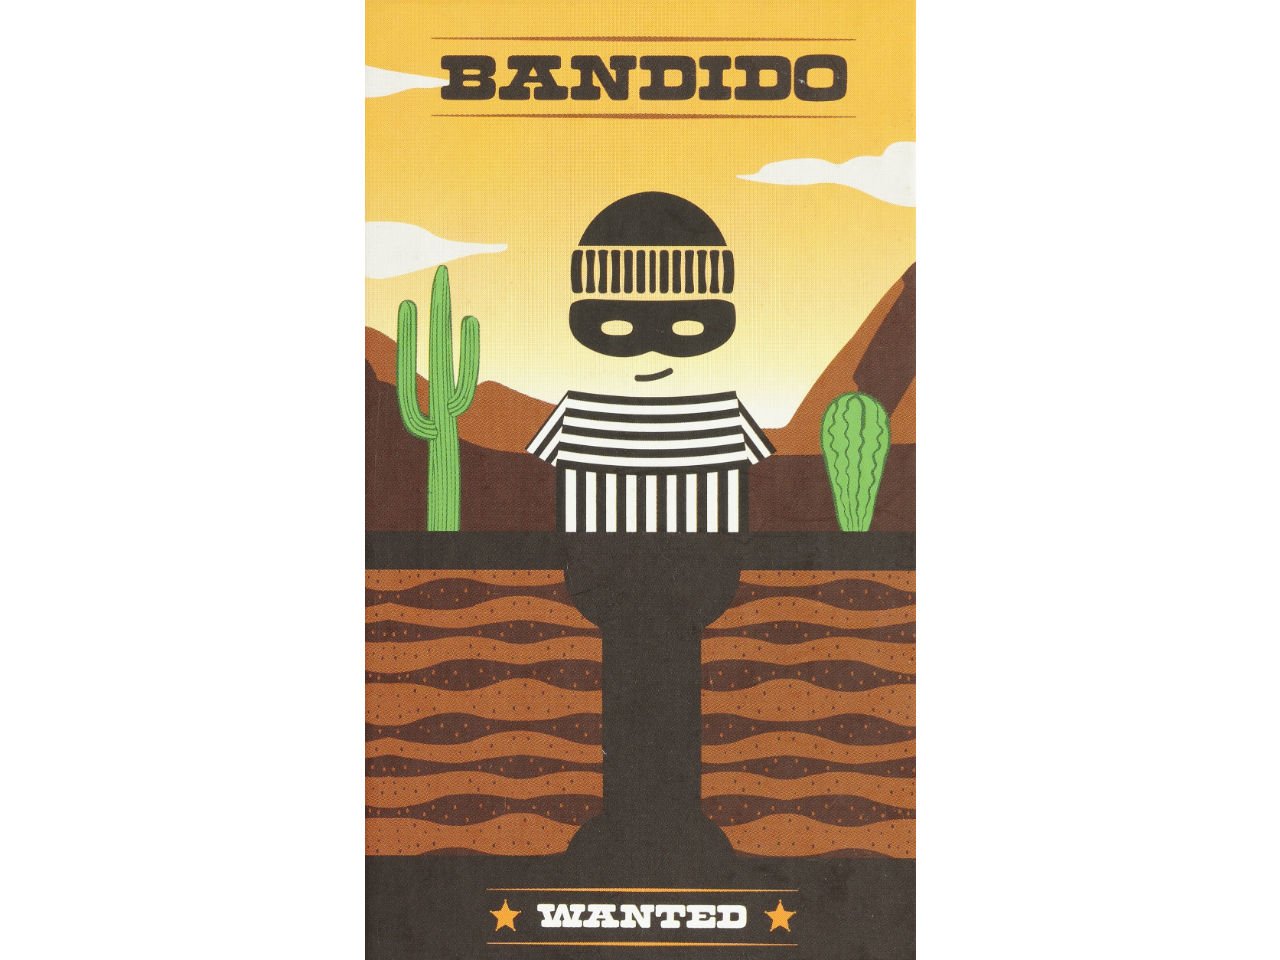 Bandido board game